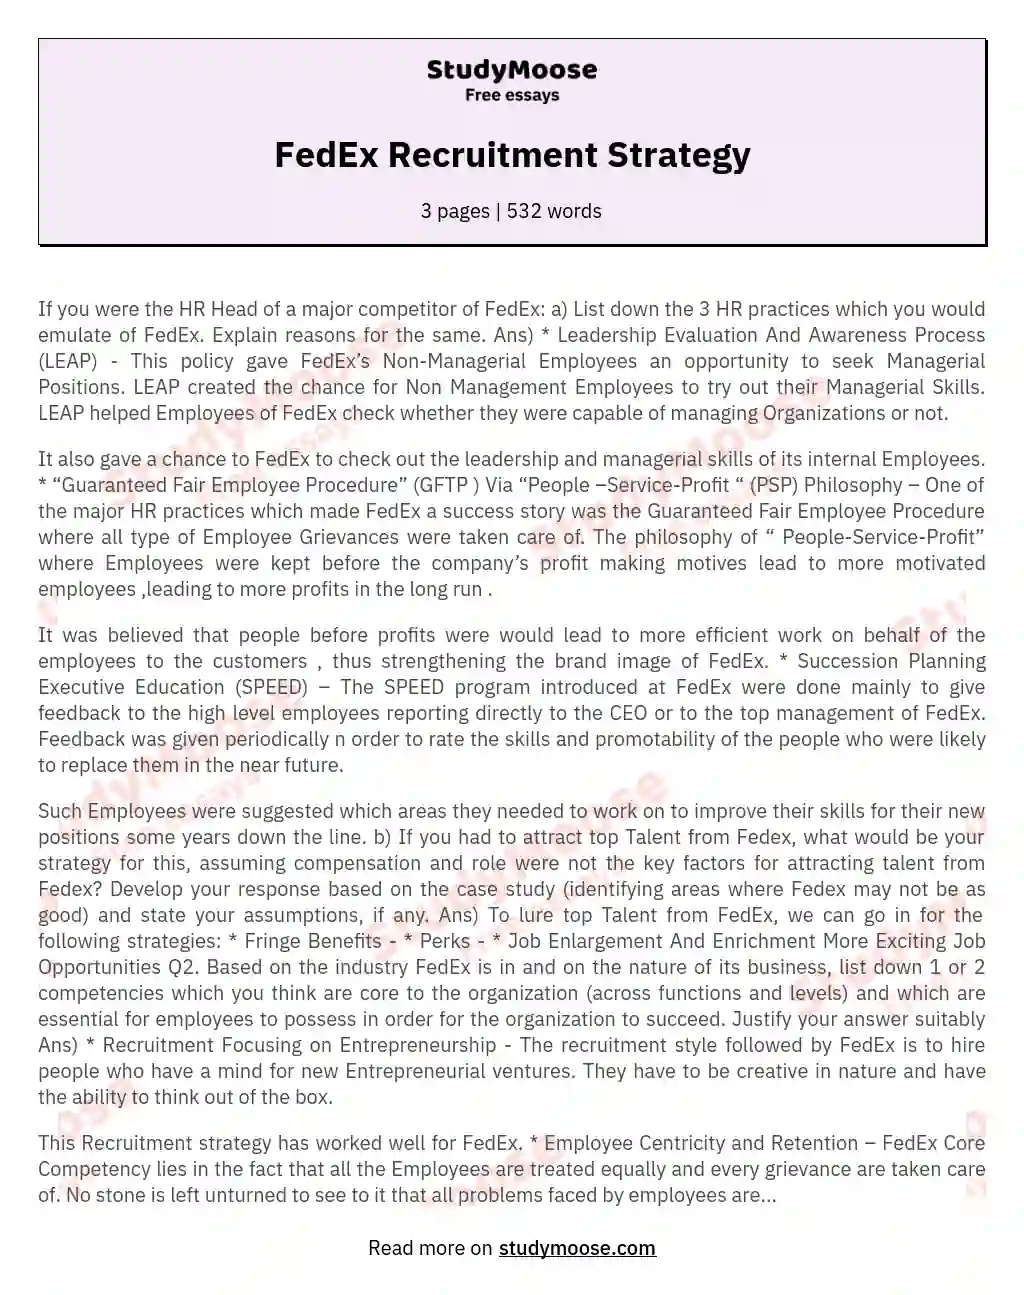 FedEx Recruitment Strategy essay